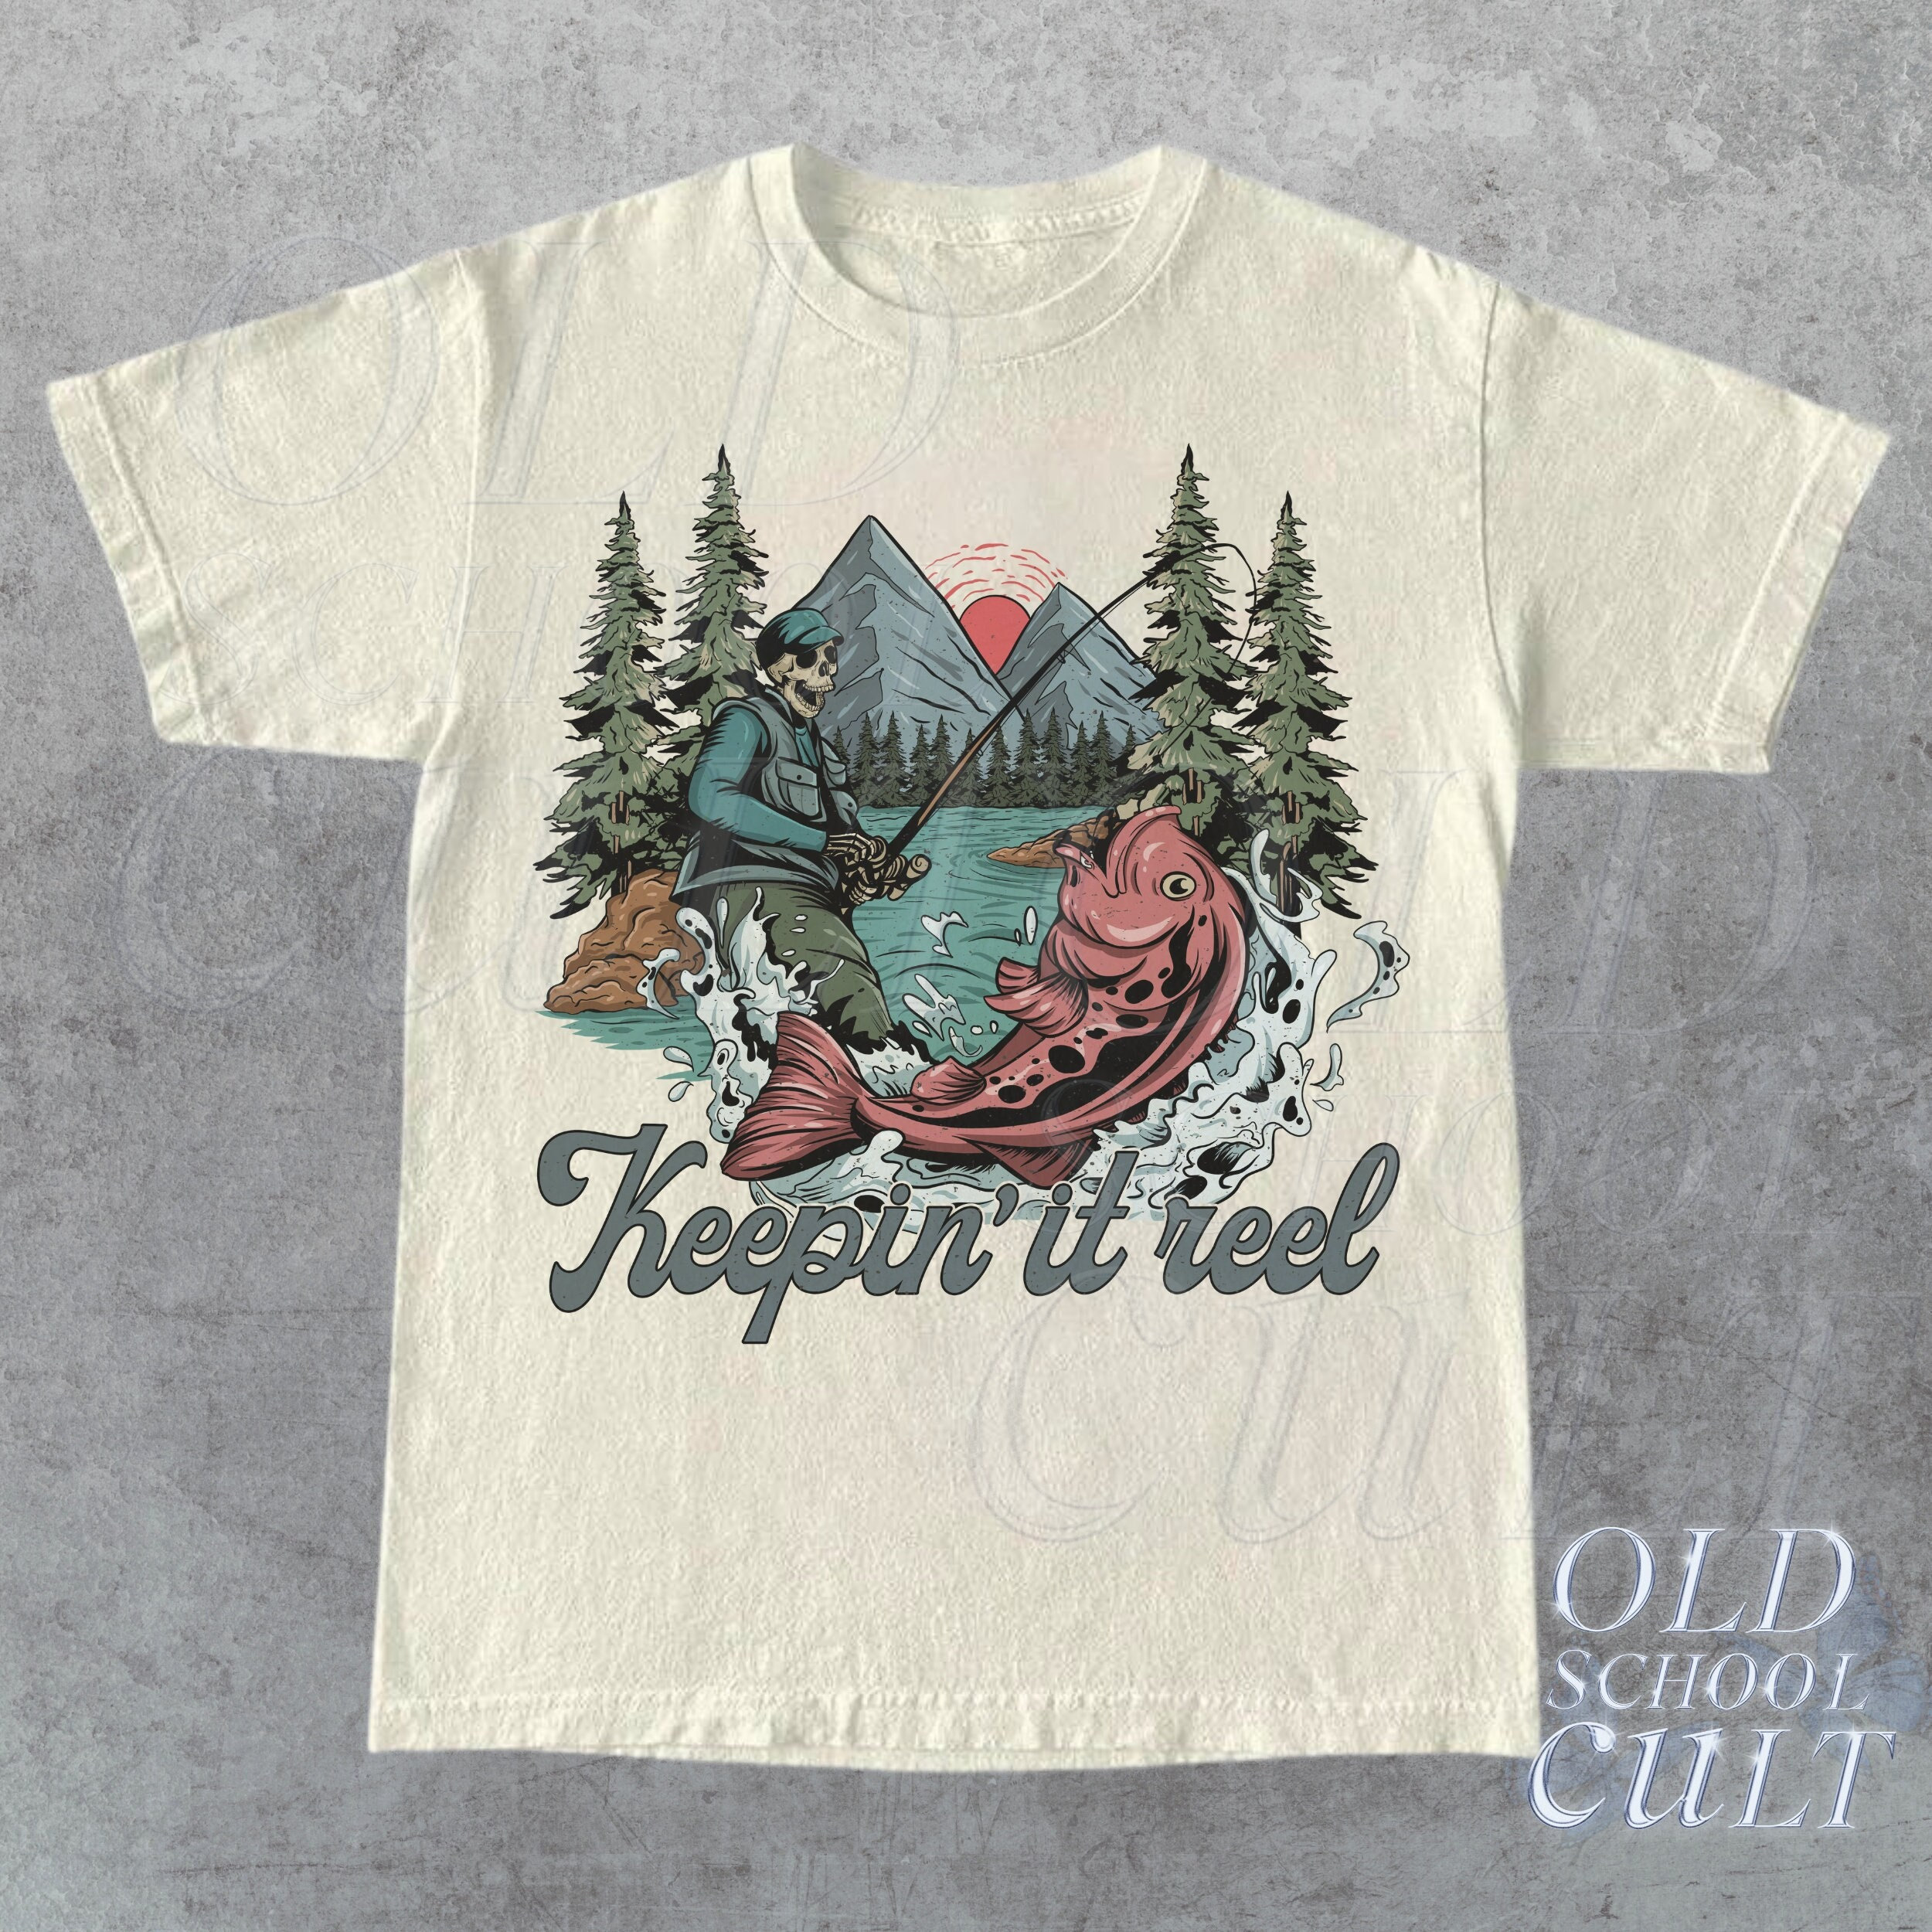 Synthwave Catfish Fishing Shirt, Tshirt, Hoodie, Sweatshirt, Long Sleeve,  Youth, funny shirts, gift shirts, Graphic Tee » Cool Gifts for You -  Mfamilygift